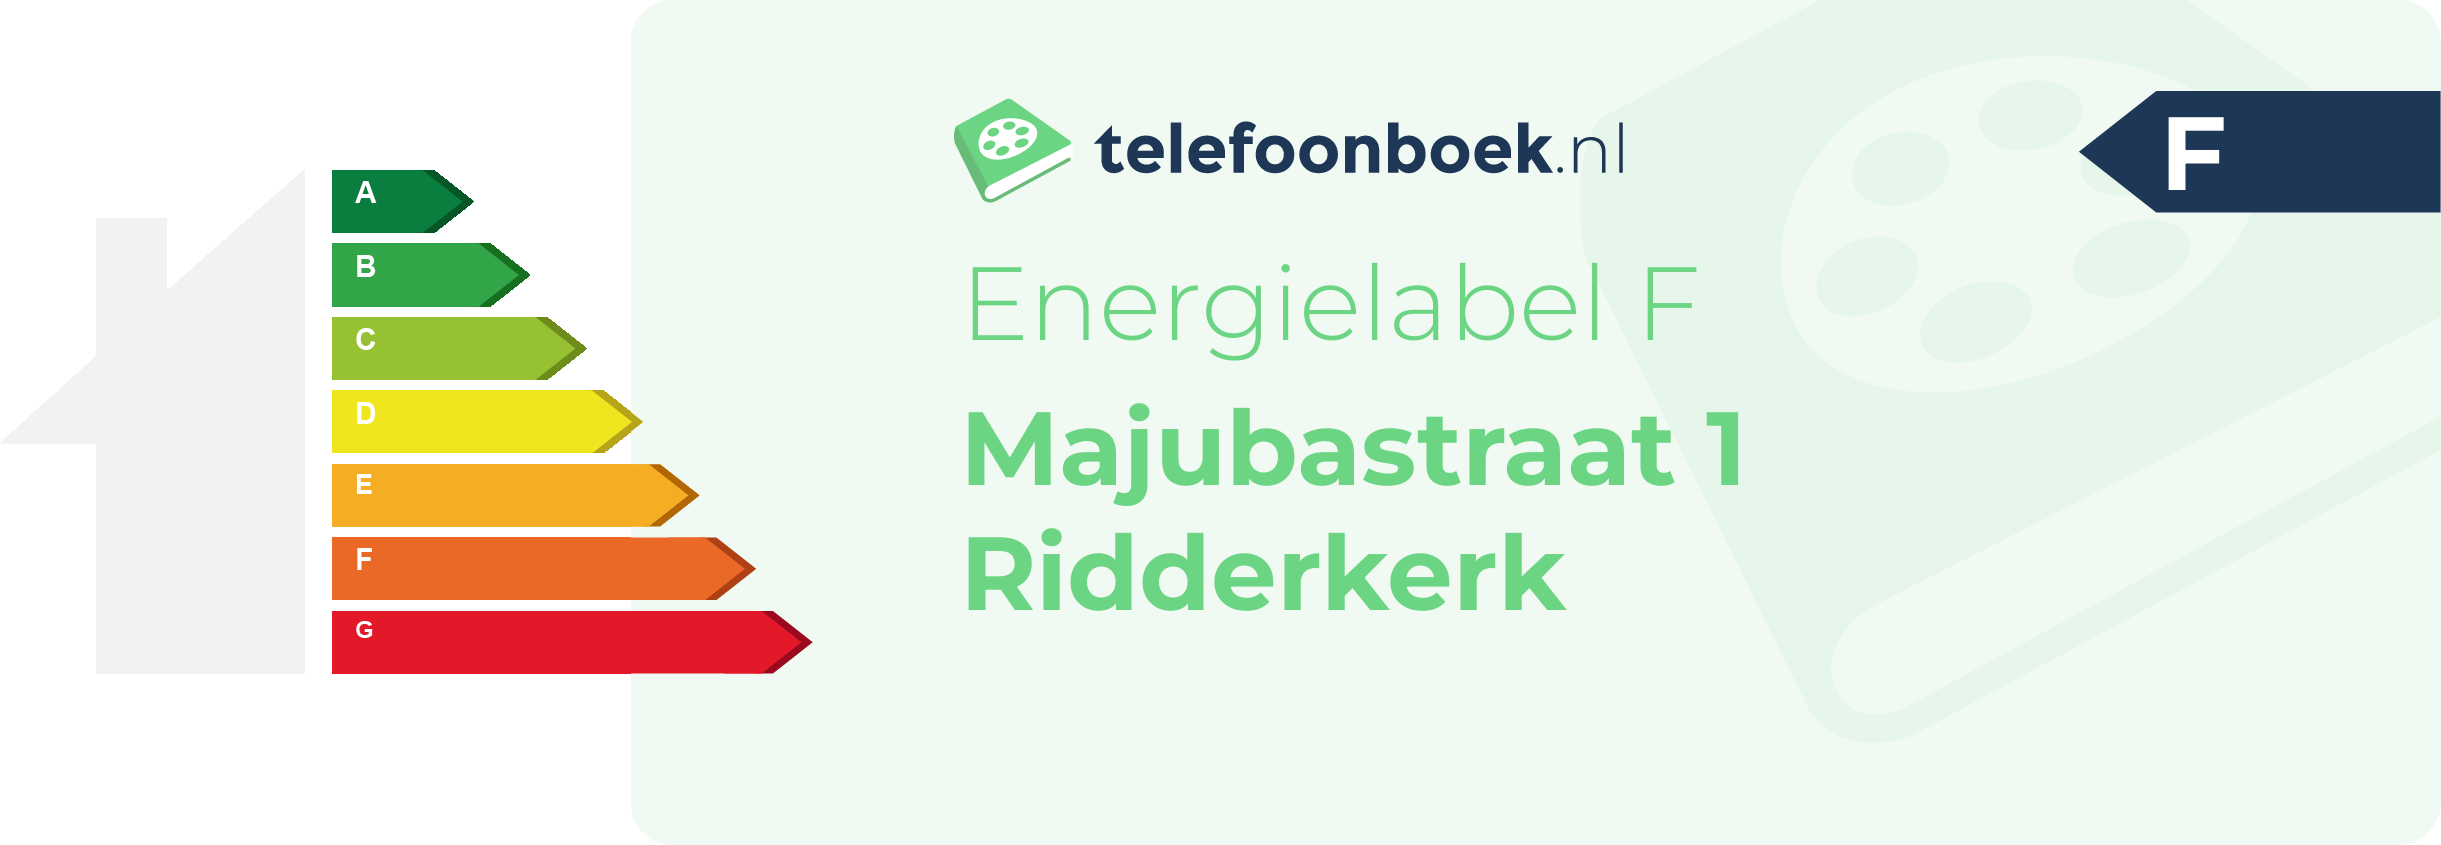 Energielabel Majubastraat 1 Ridderkerk